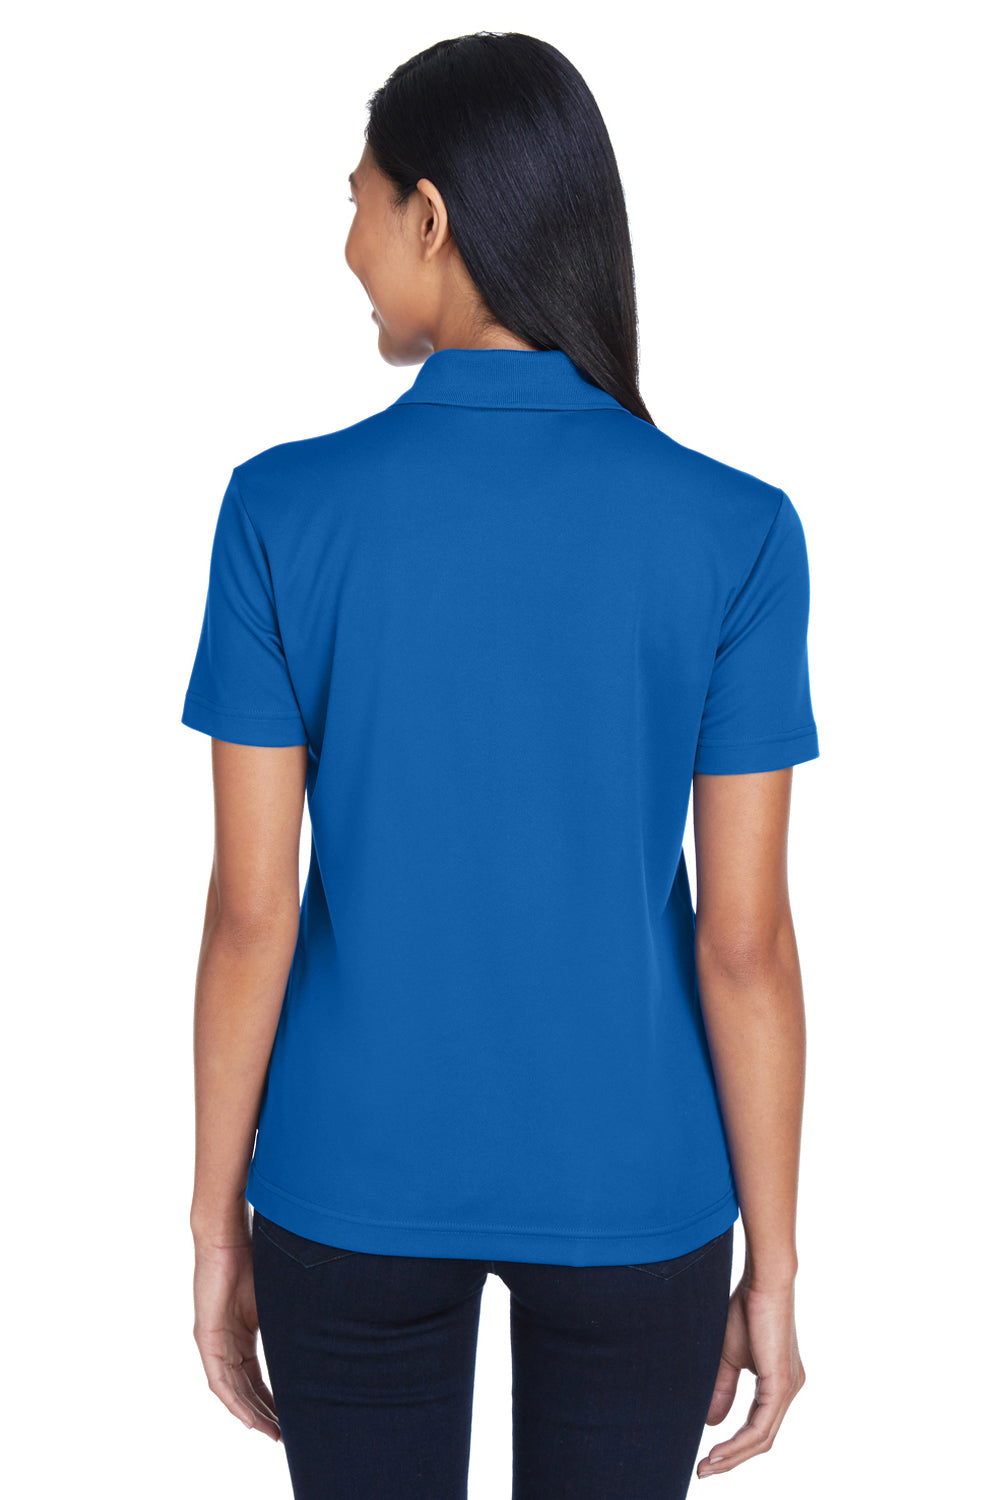 Core 365 78181P Womens Origin Performance Moisture Wicking Short Sleeve Polo Shirt w/ Pocket Royal Blue Back